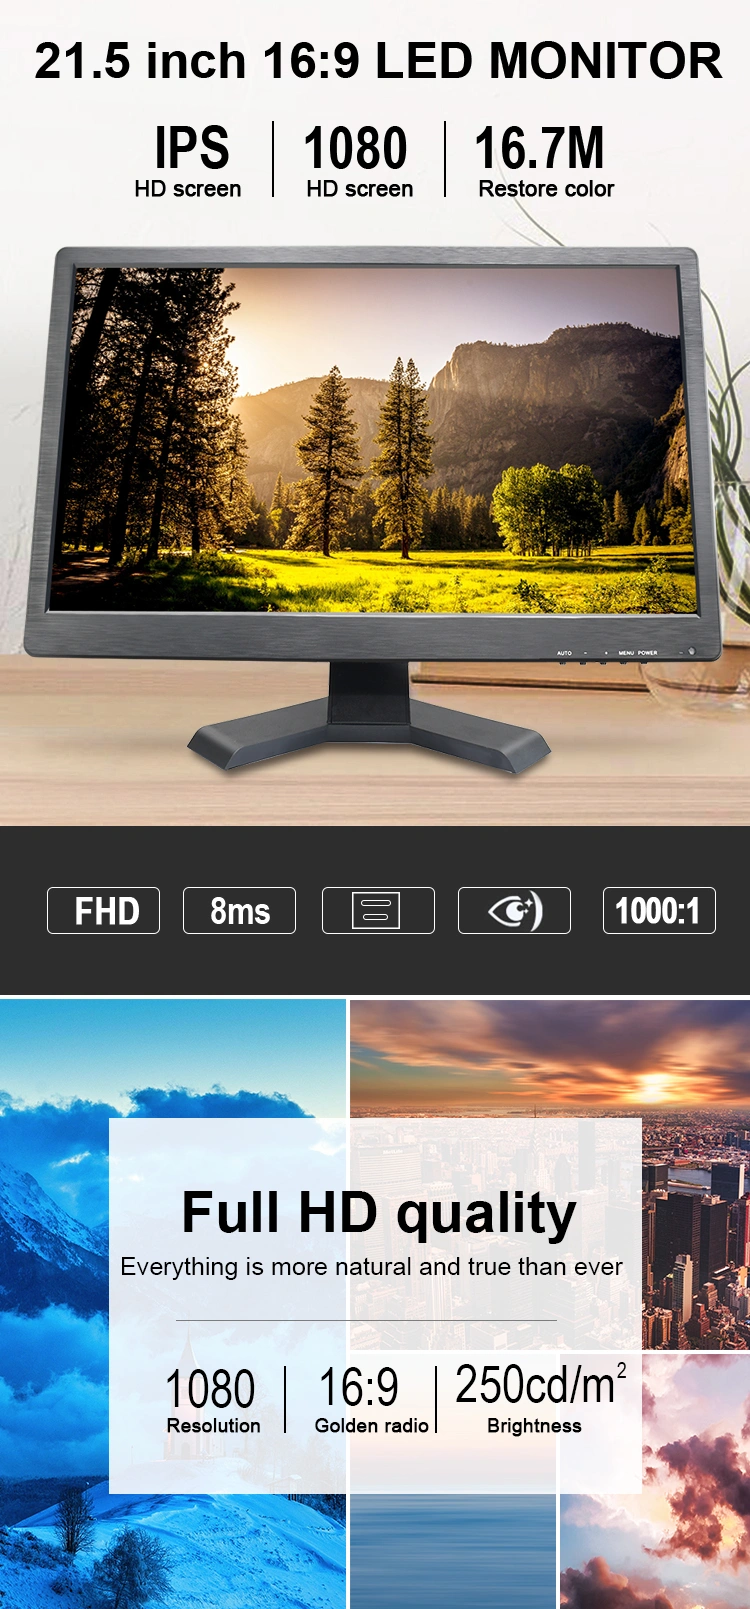 professional widescreen bnc lcd monitor video bokep cctv monitor